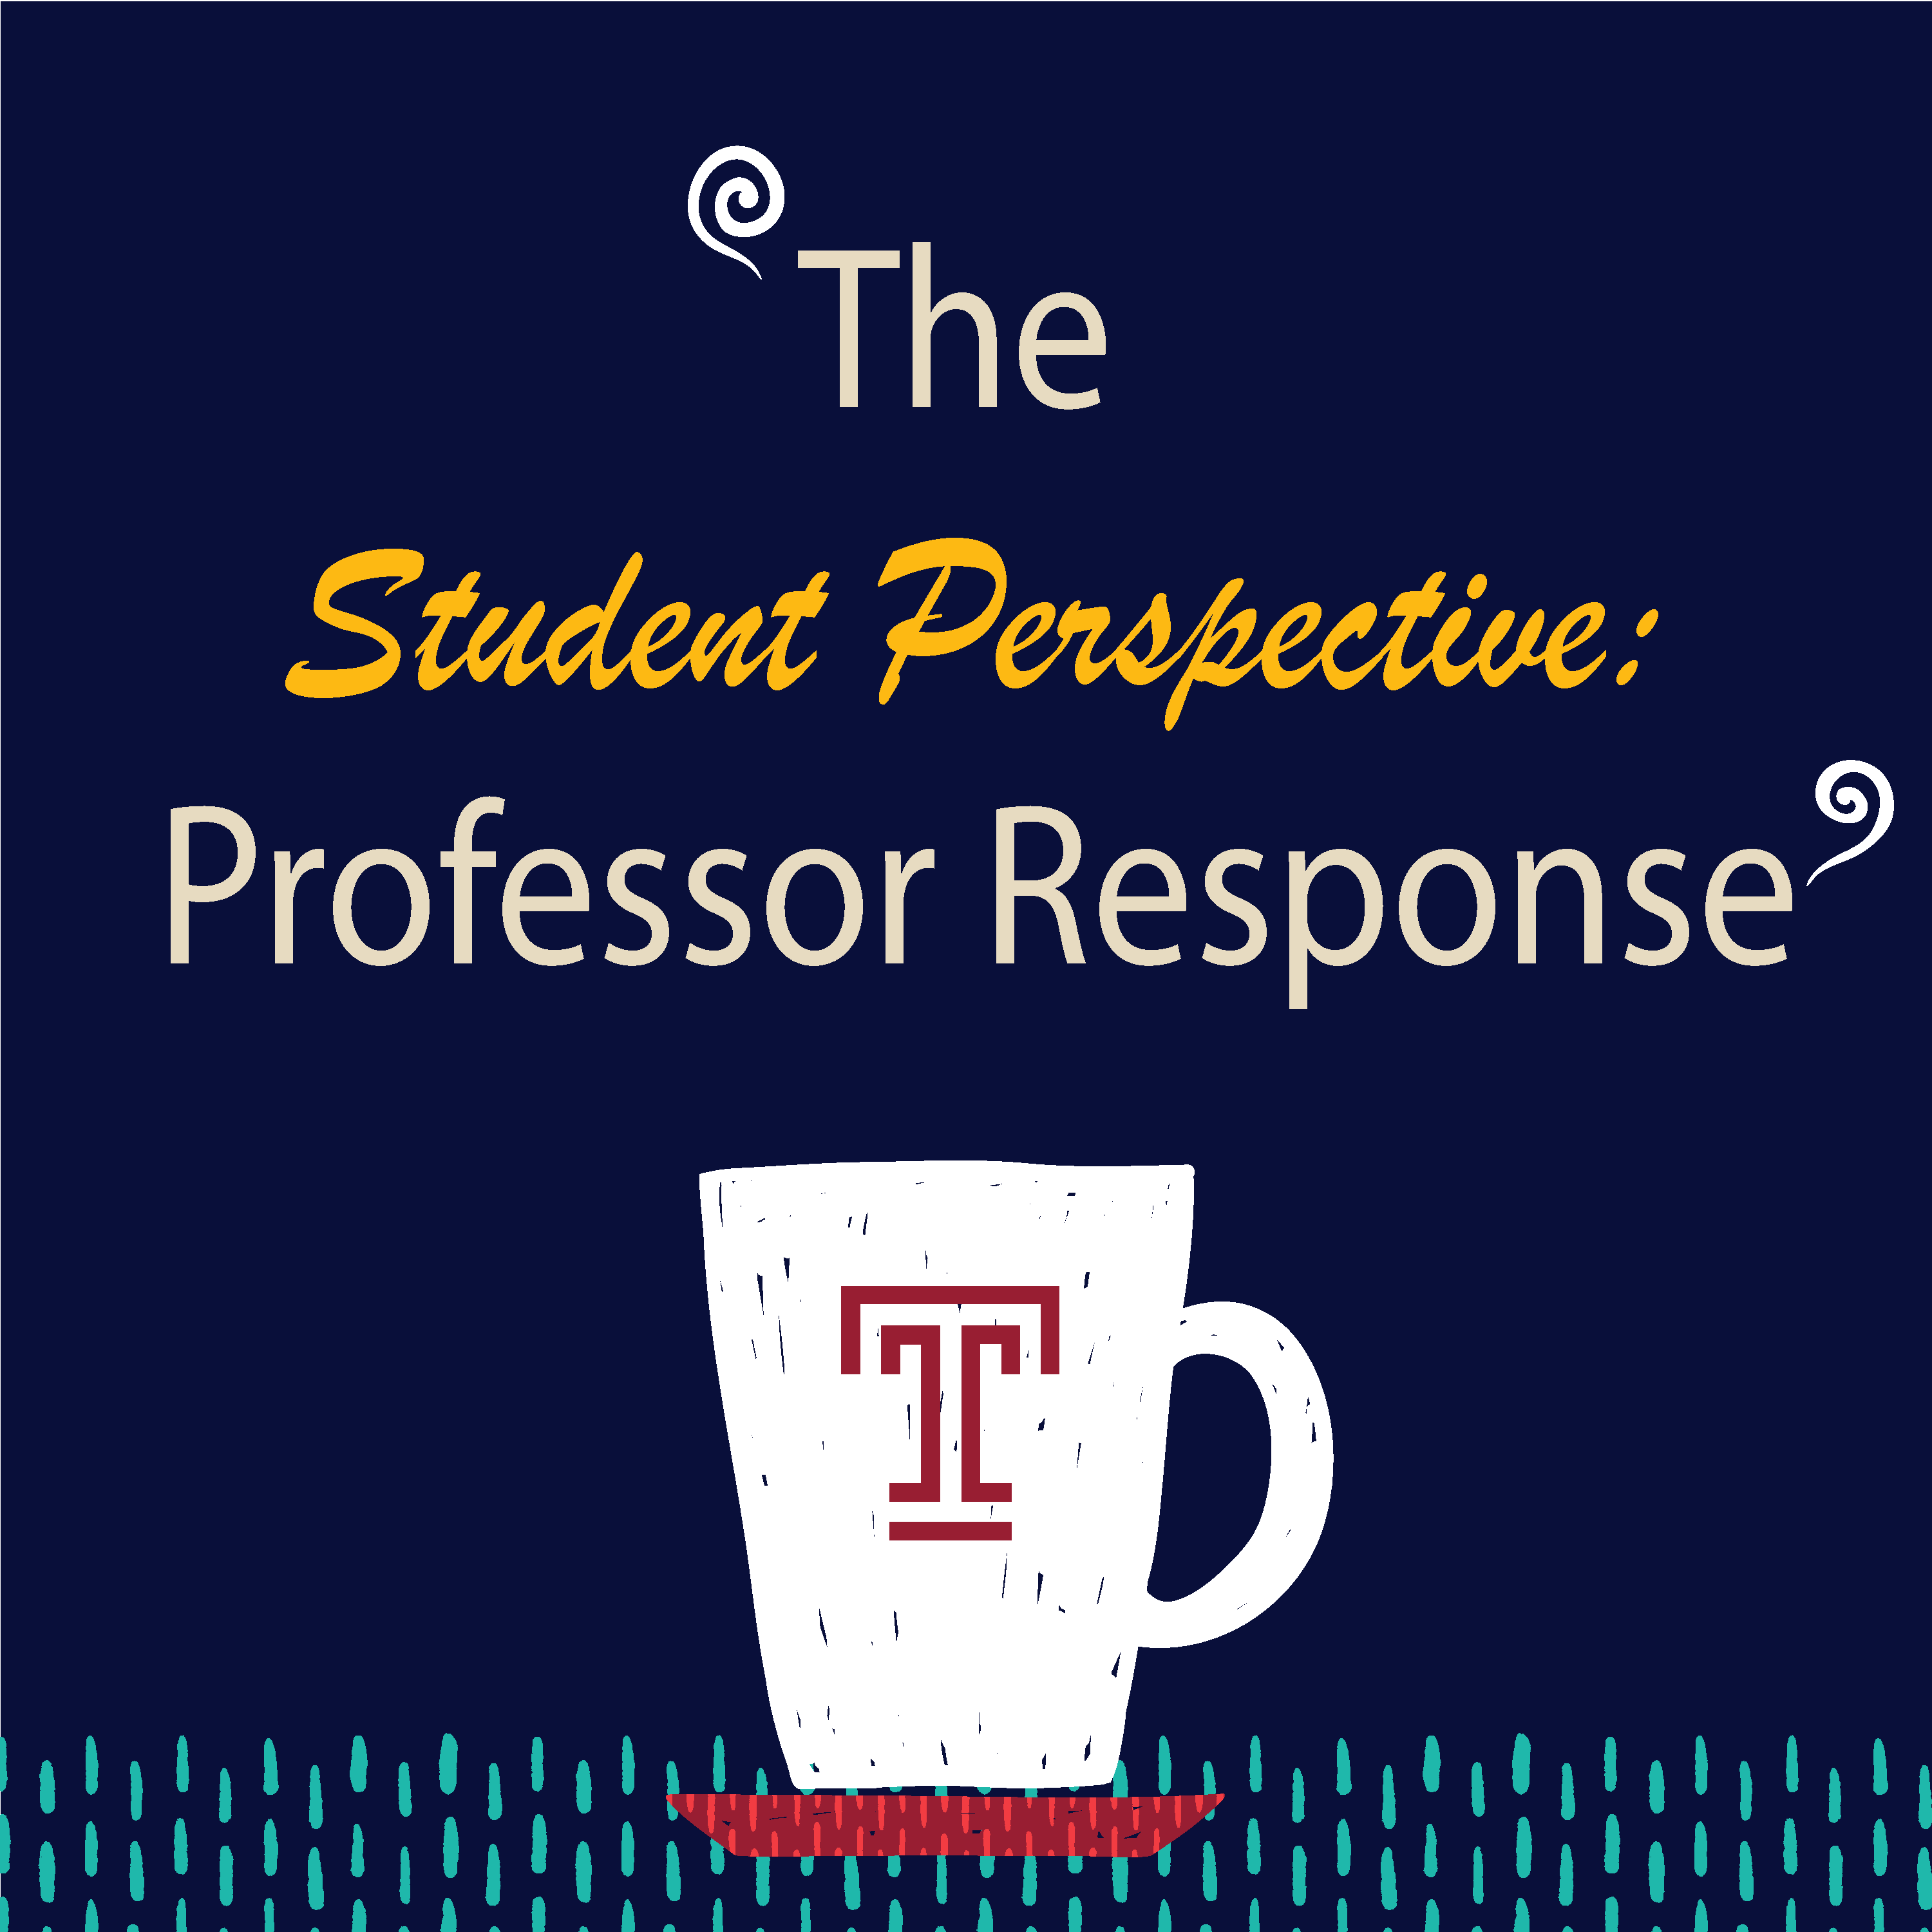 The Student Perspective: Professor Response